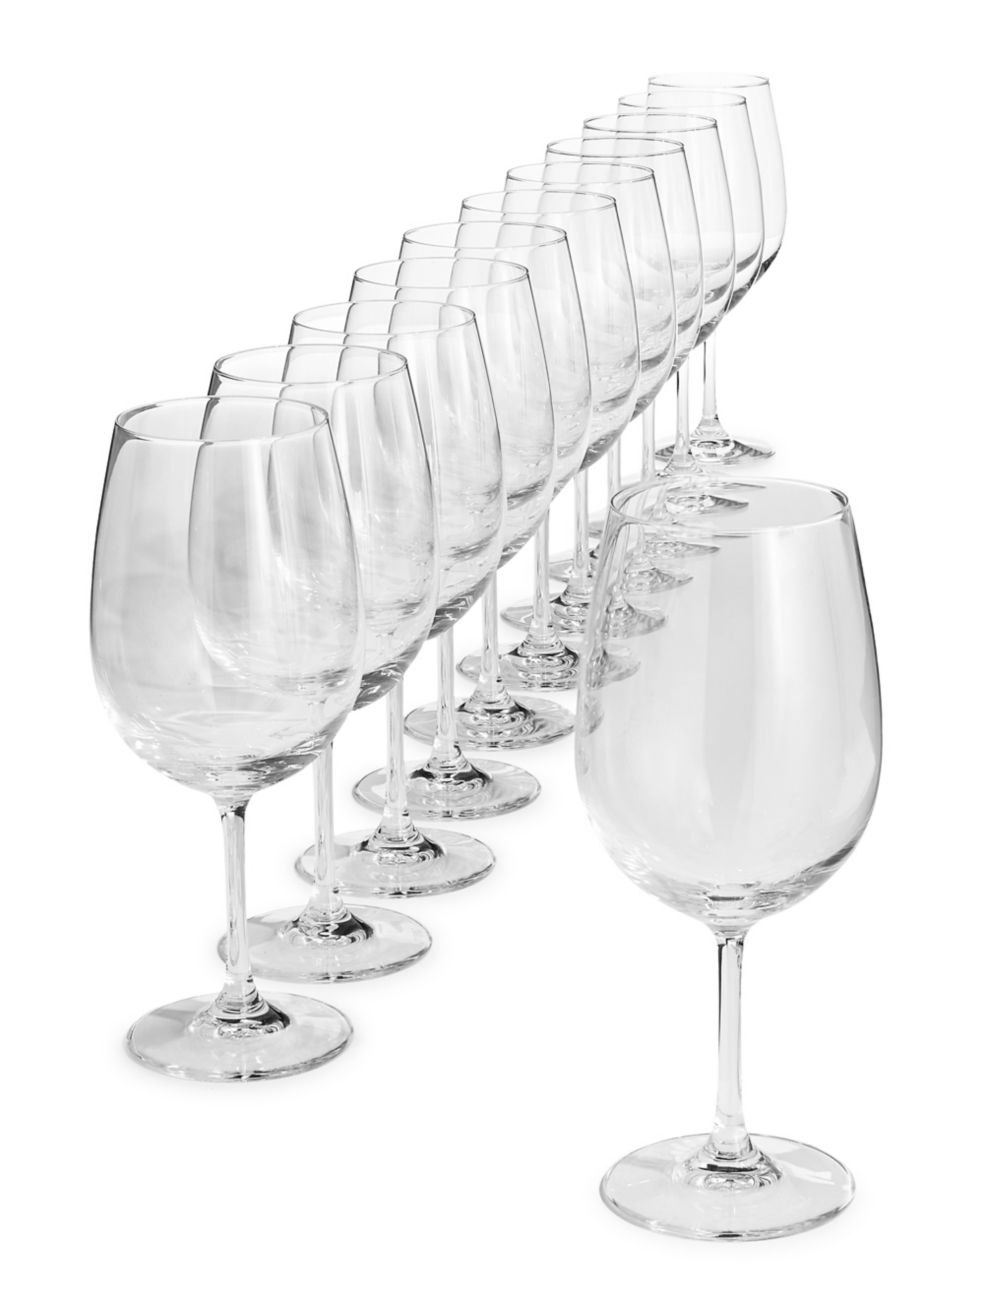 GlucksteinHome Catering wine glass set of 12